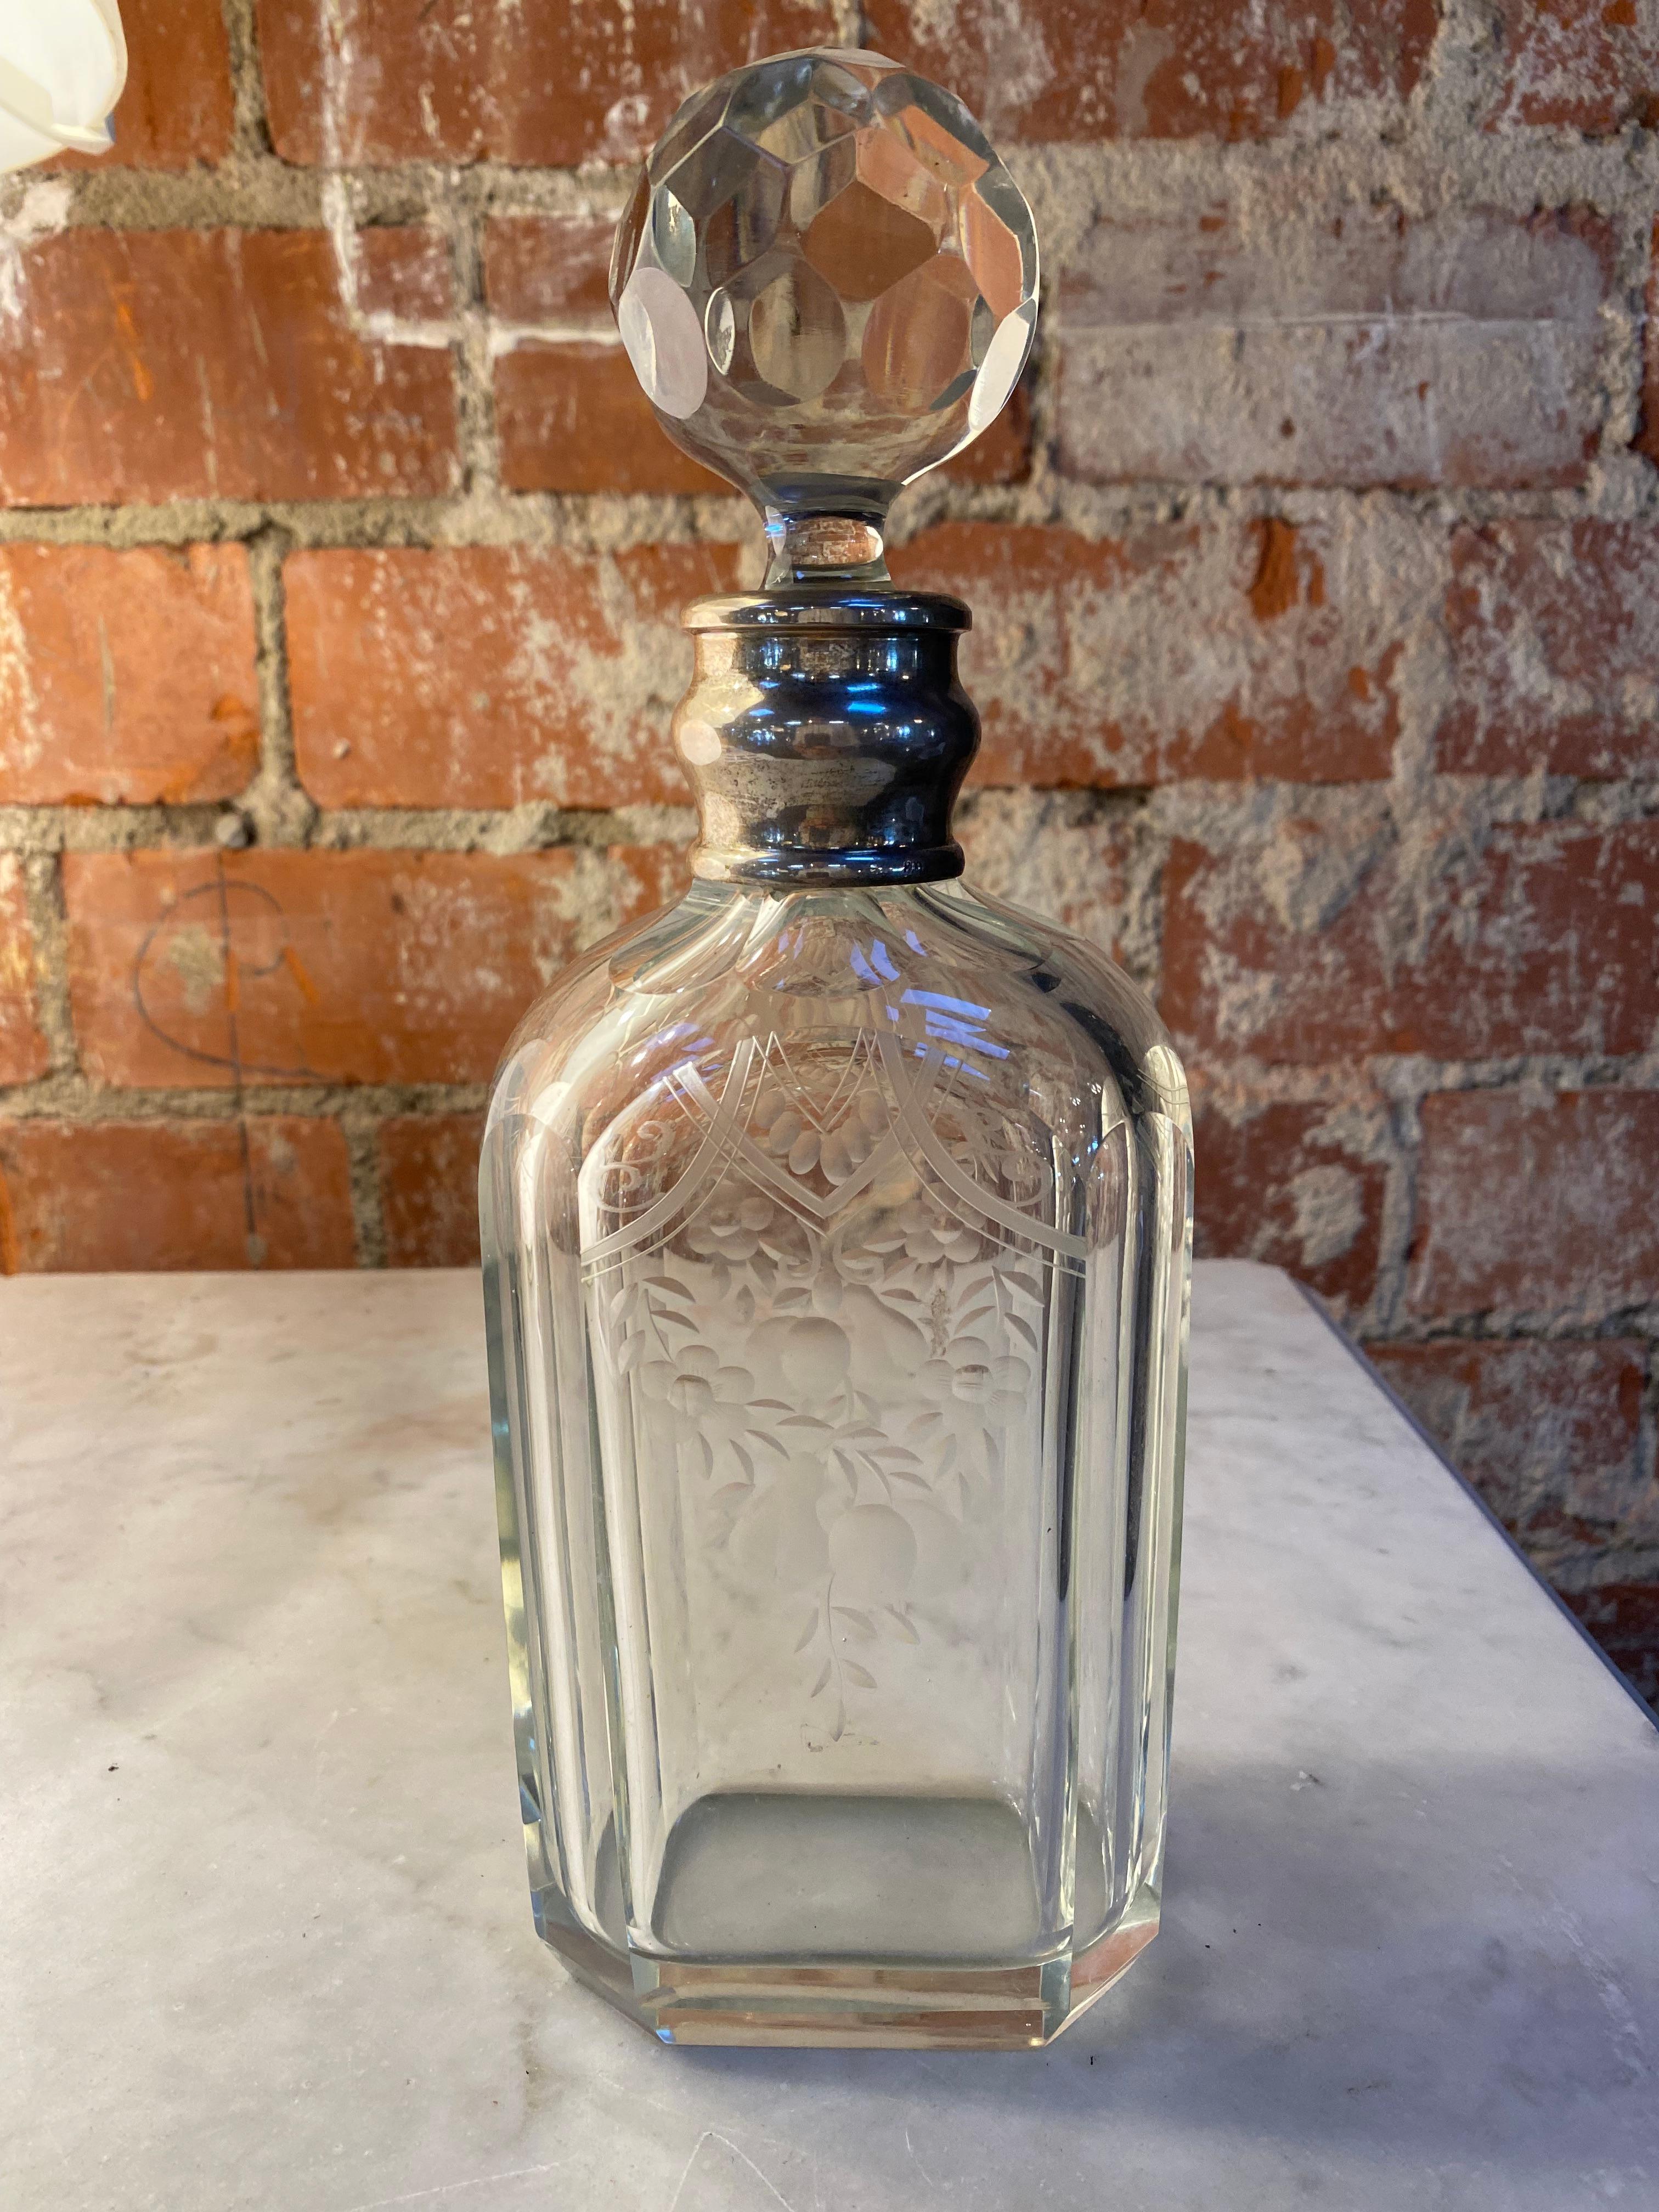 Decorative Italian bottle made in 1950s.